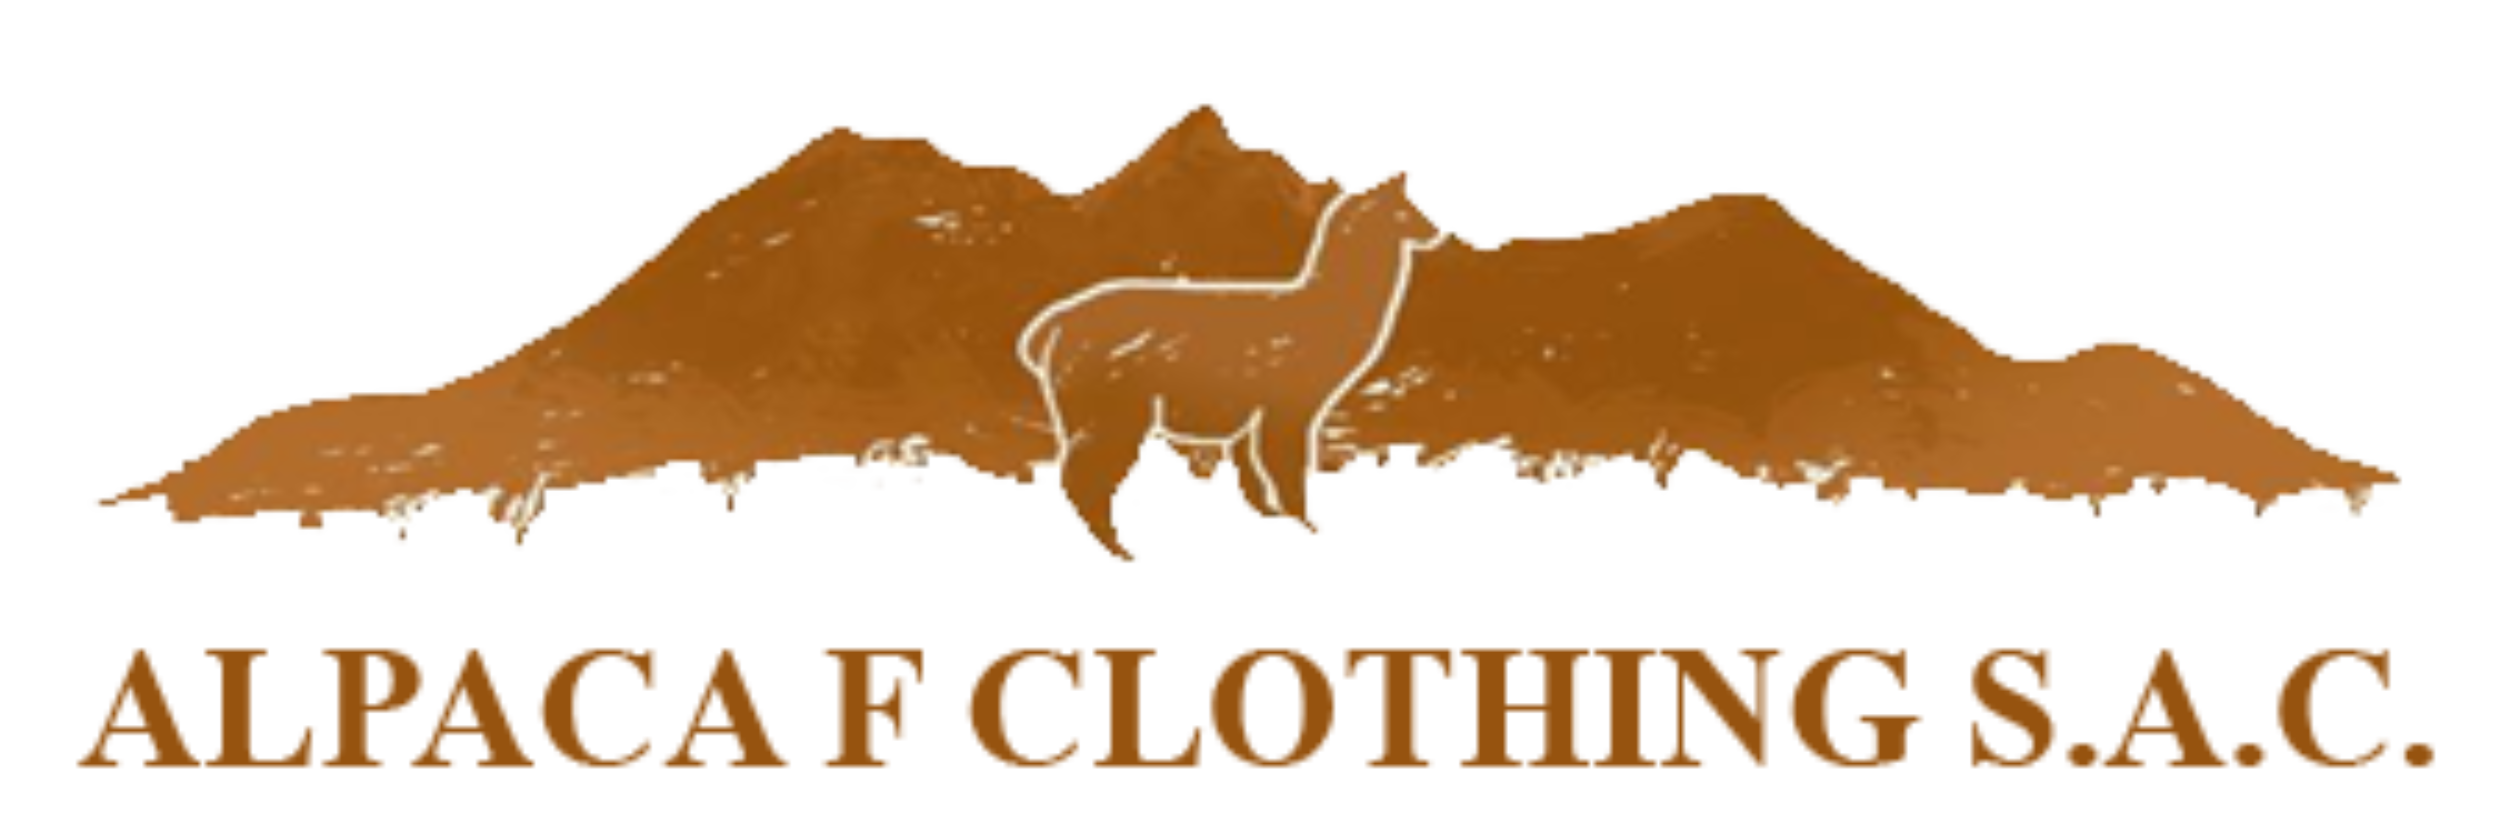 Alpaca f clothing